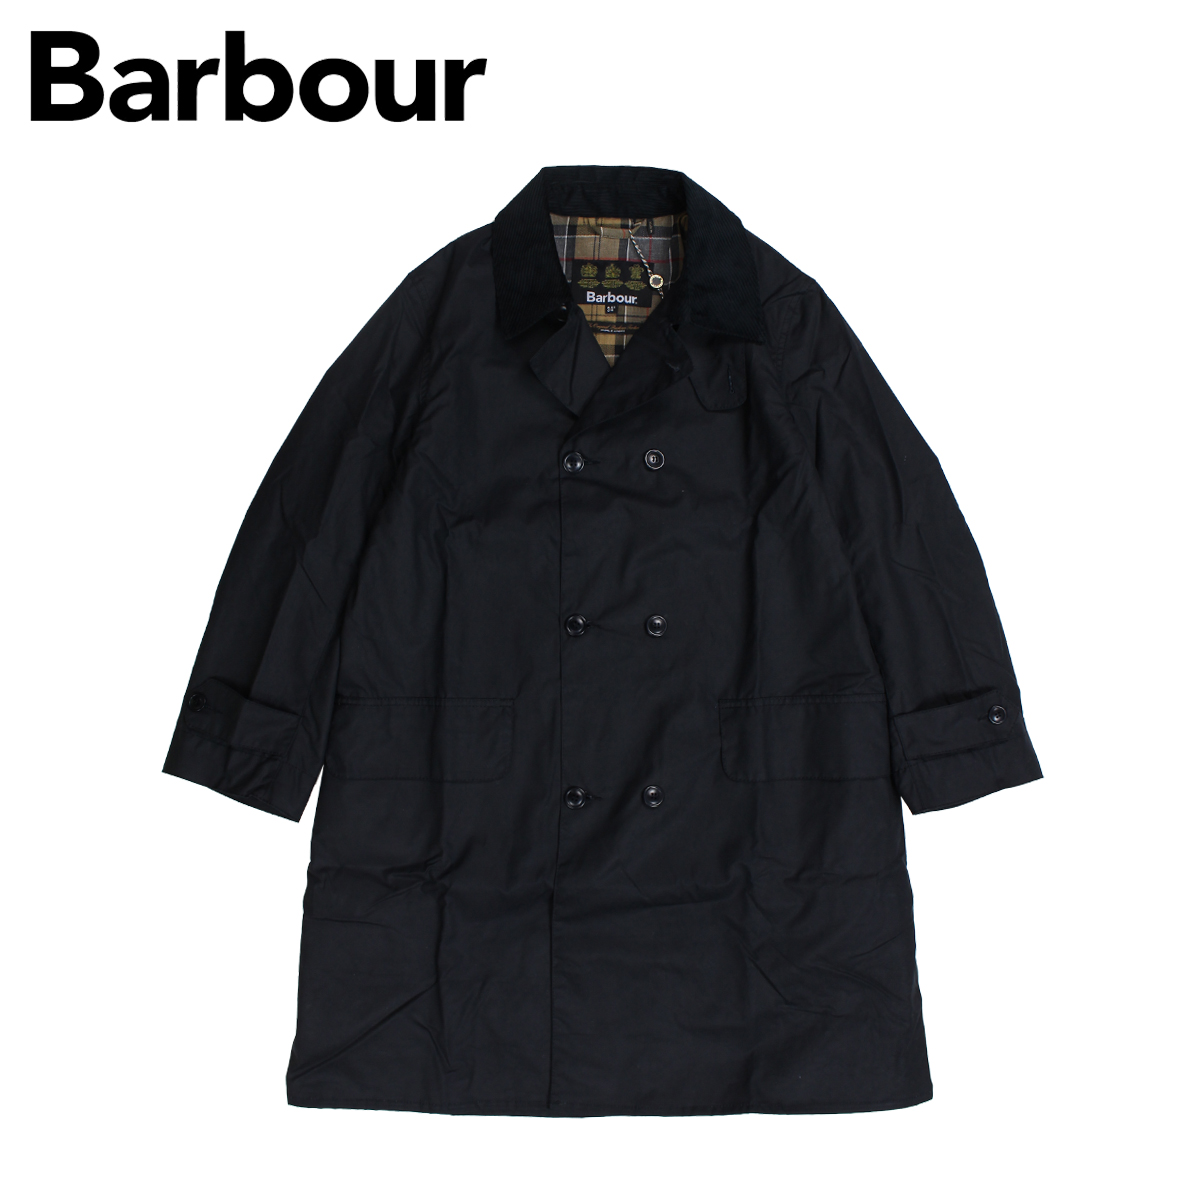 barbour jacket shop